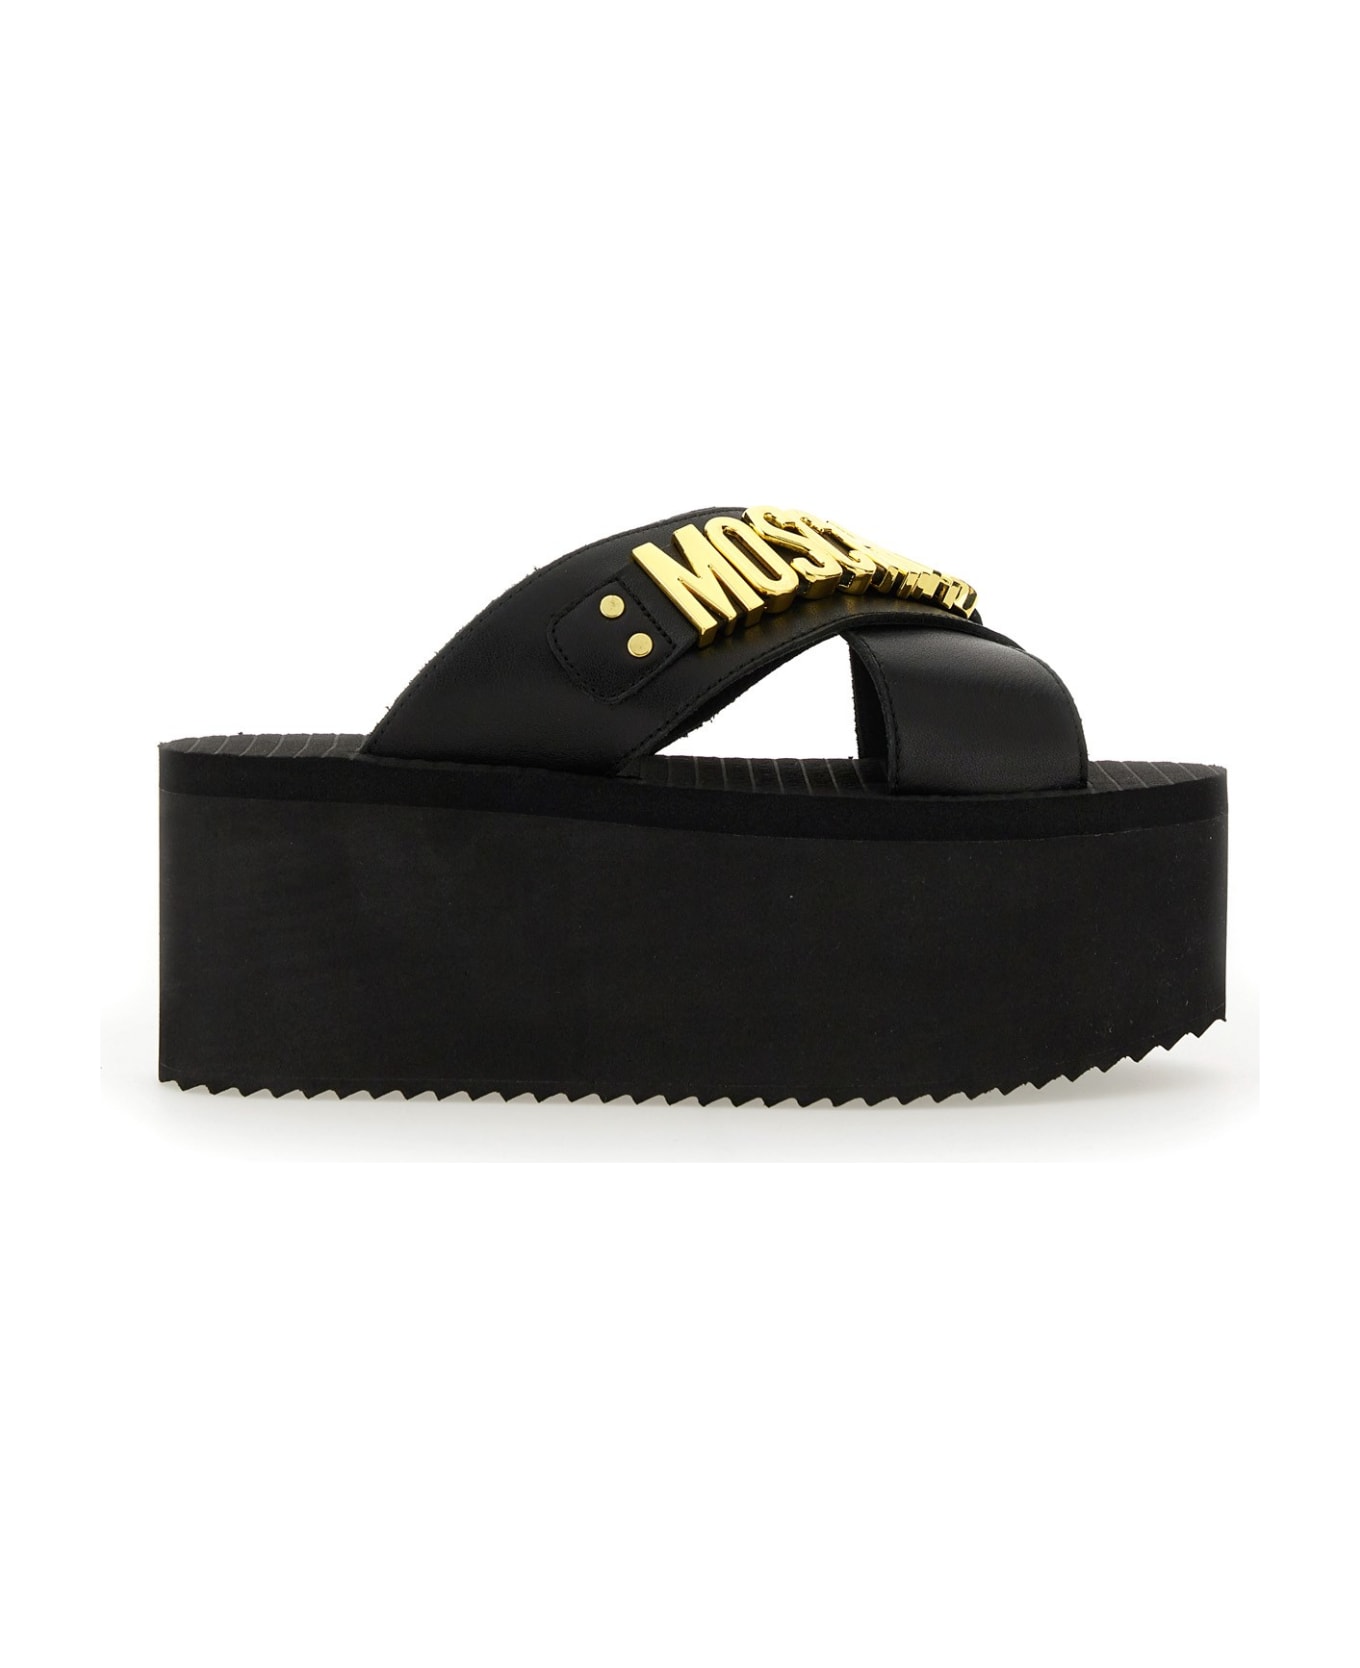 Moschino Wedge Sandals - Black